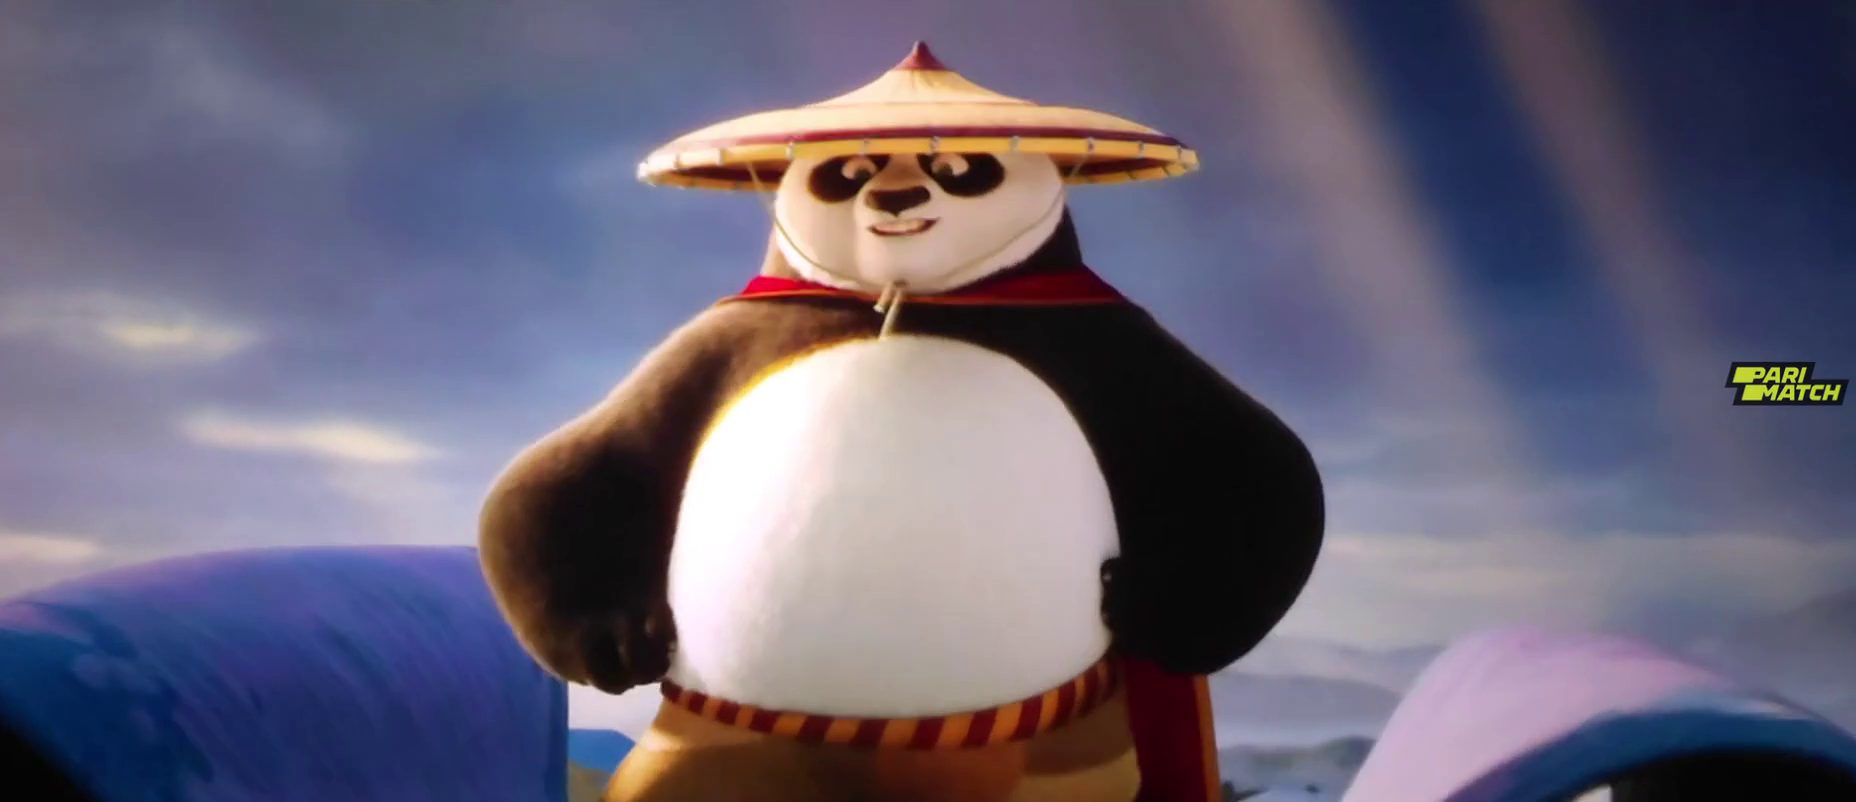 Kung Fu Panda 4 2024 Dual Audio CAMRip || 300Mb || 720p || 1080p